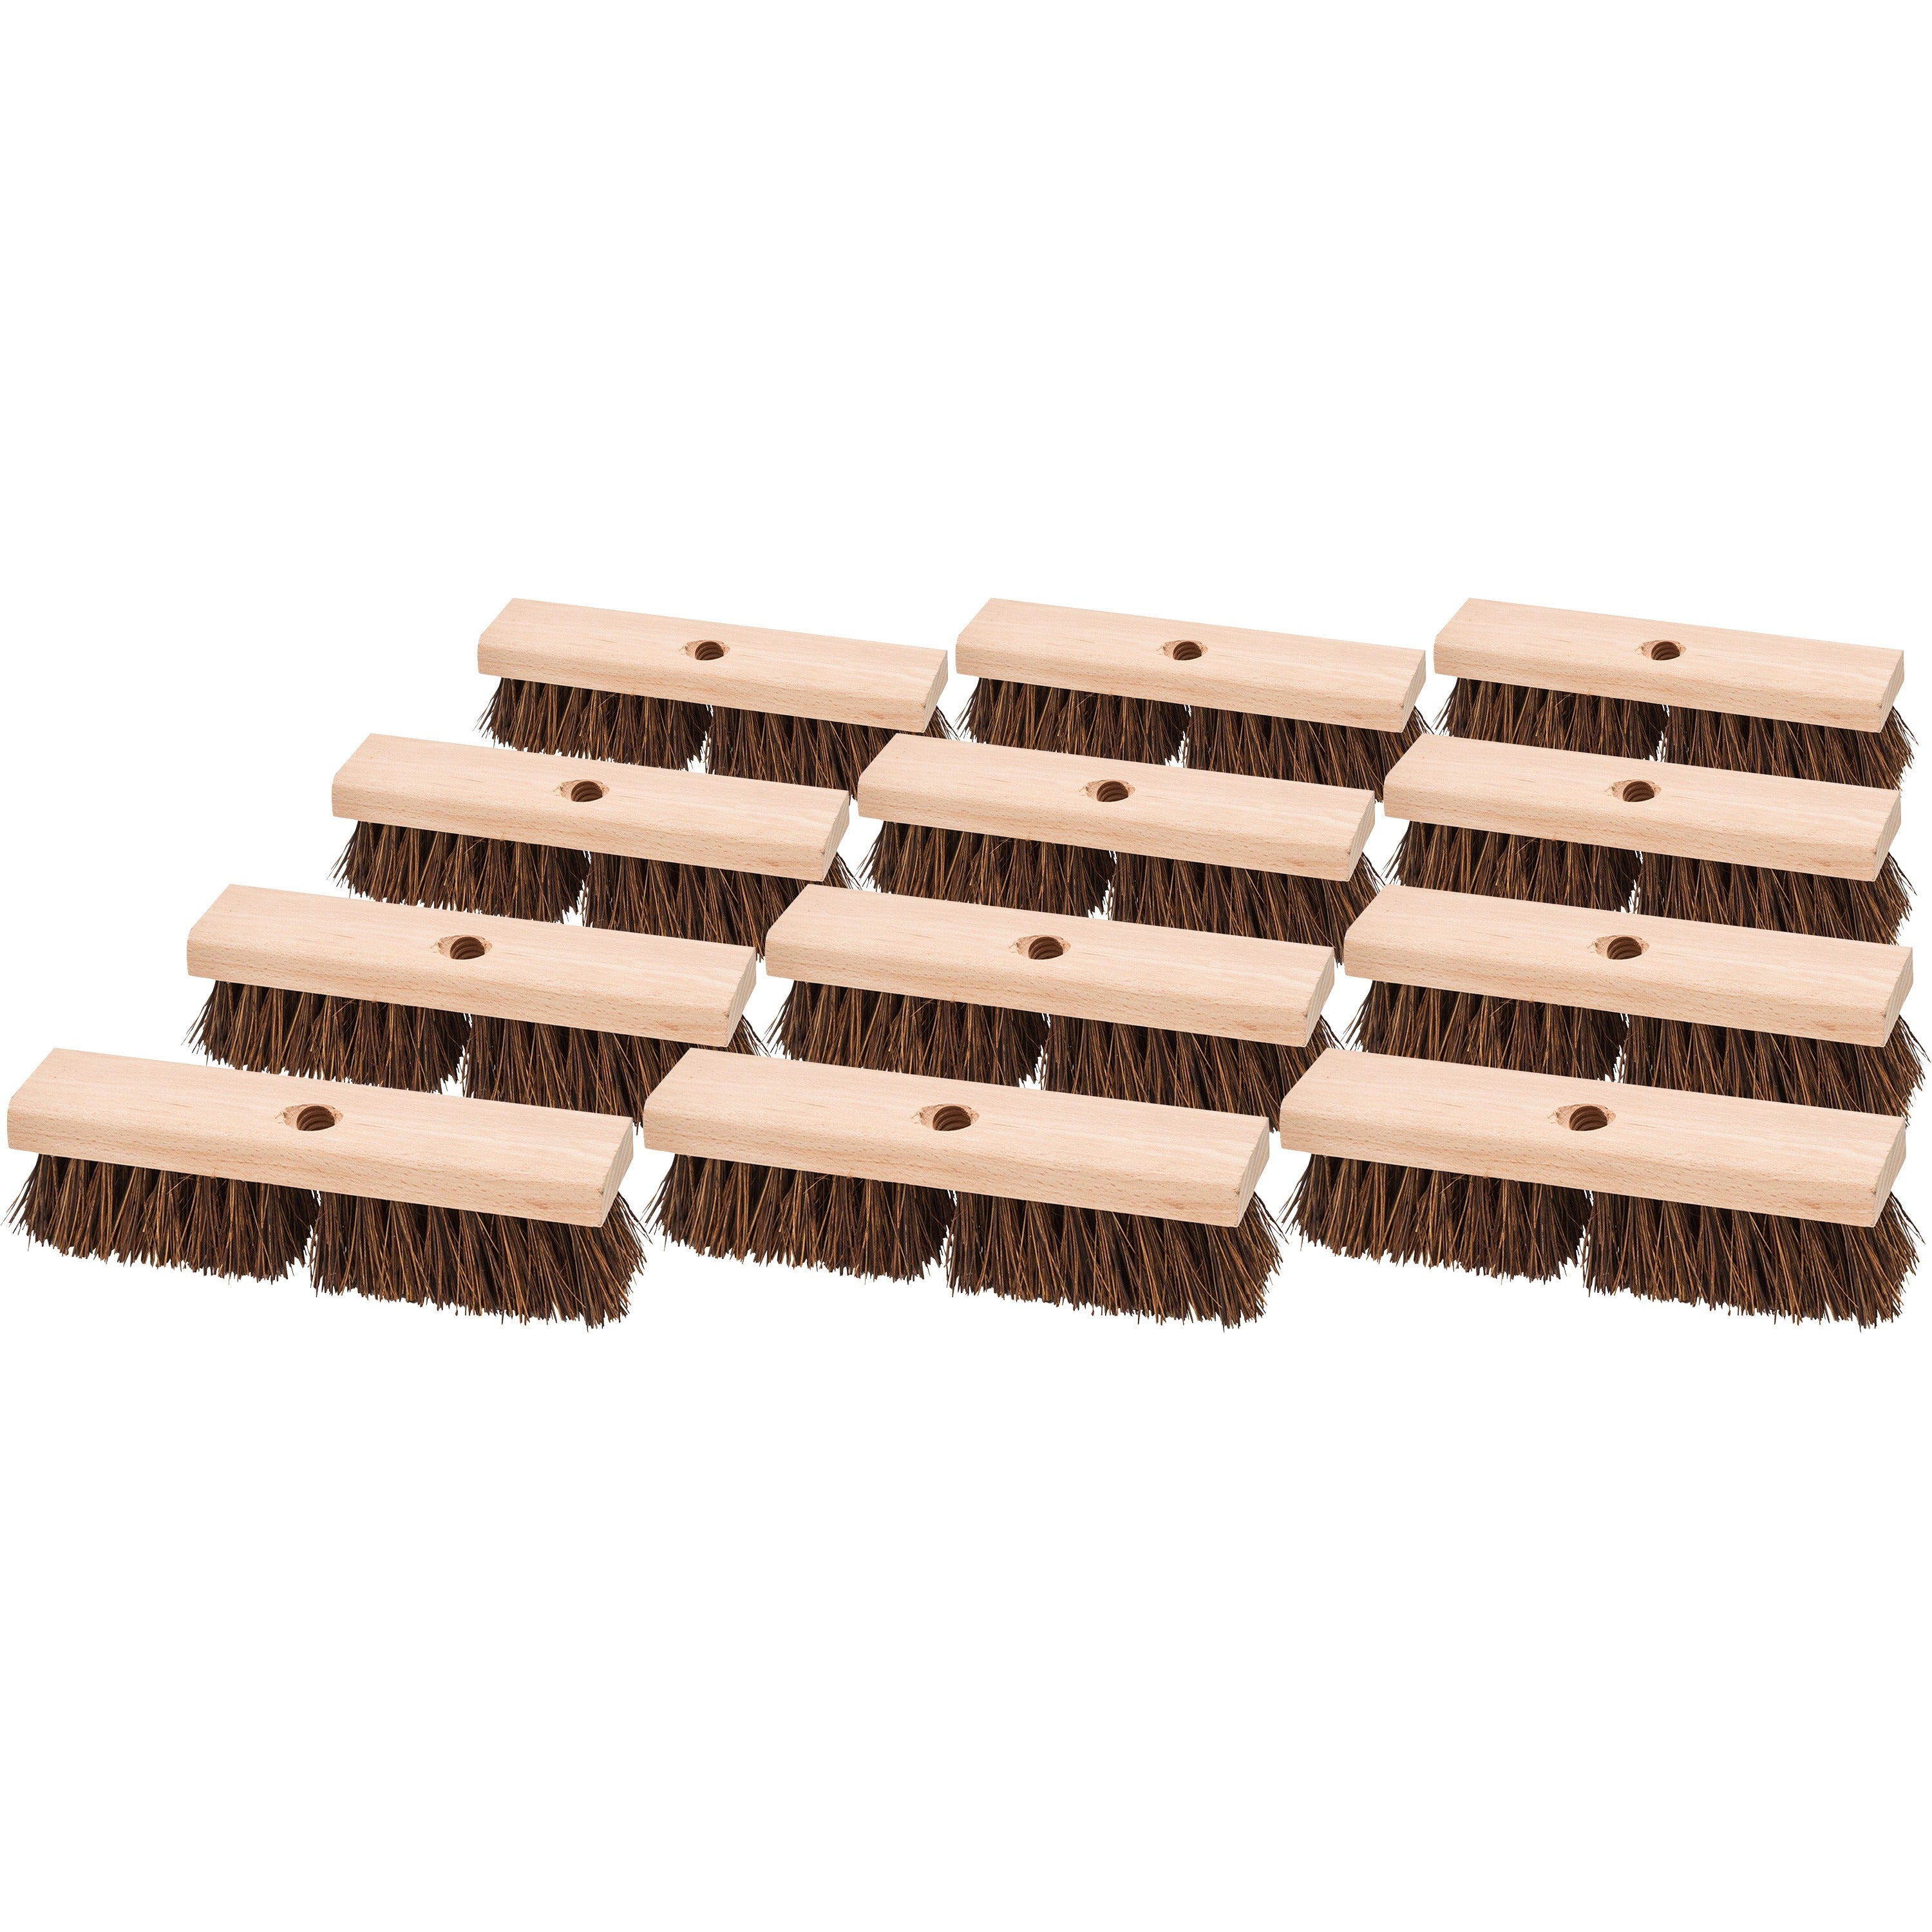 genuine-joe-deck-floor-brush-2-palmyra-bristle-10-handle-width-hardwood-handle-12-carton-brown_gjo18416ct - 1